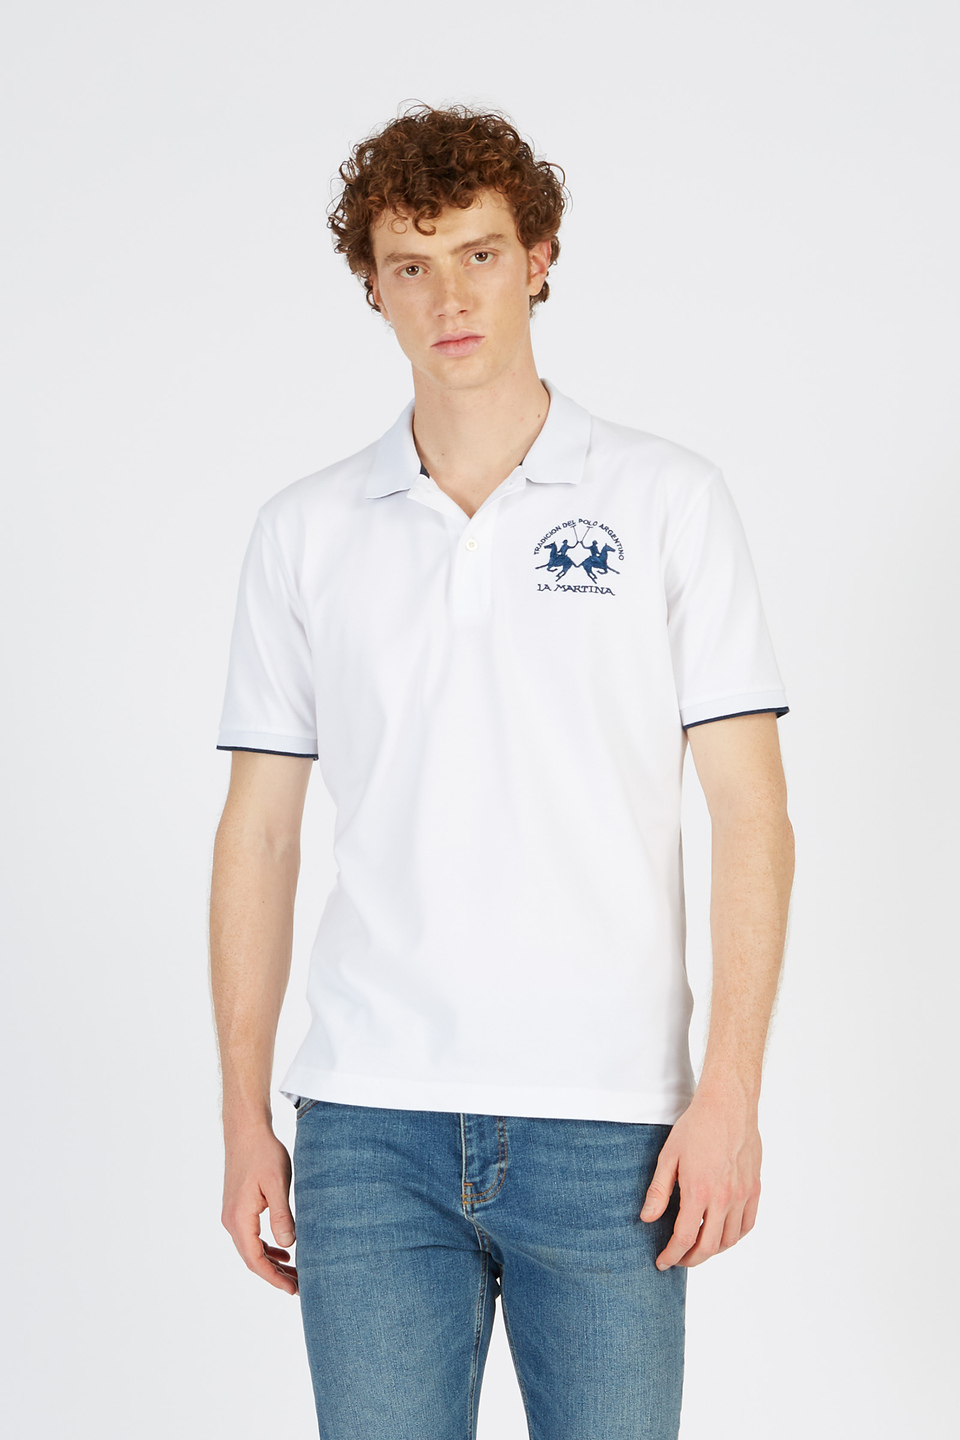 Herren-Poloshirt regular fit | La Martina - Official Online Shop